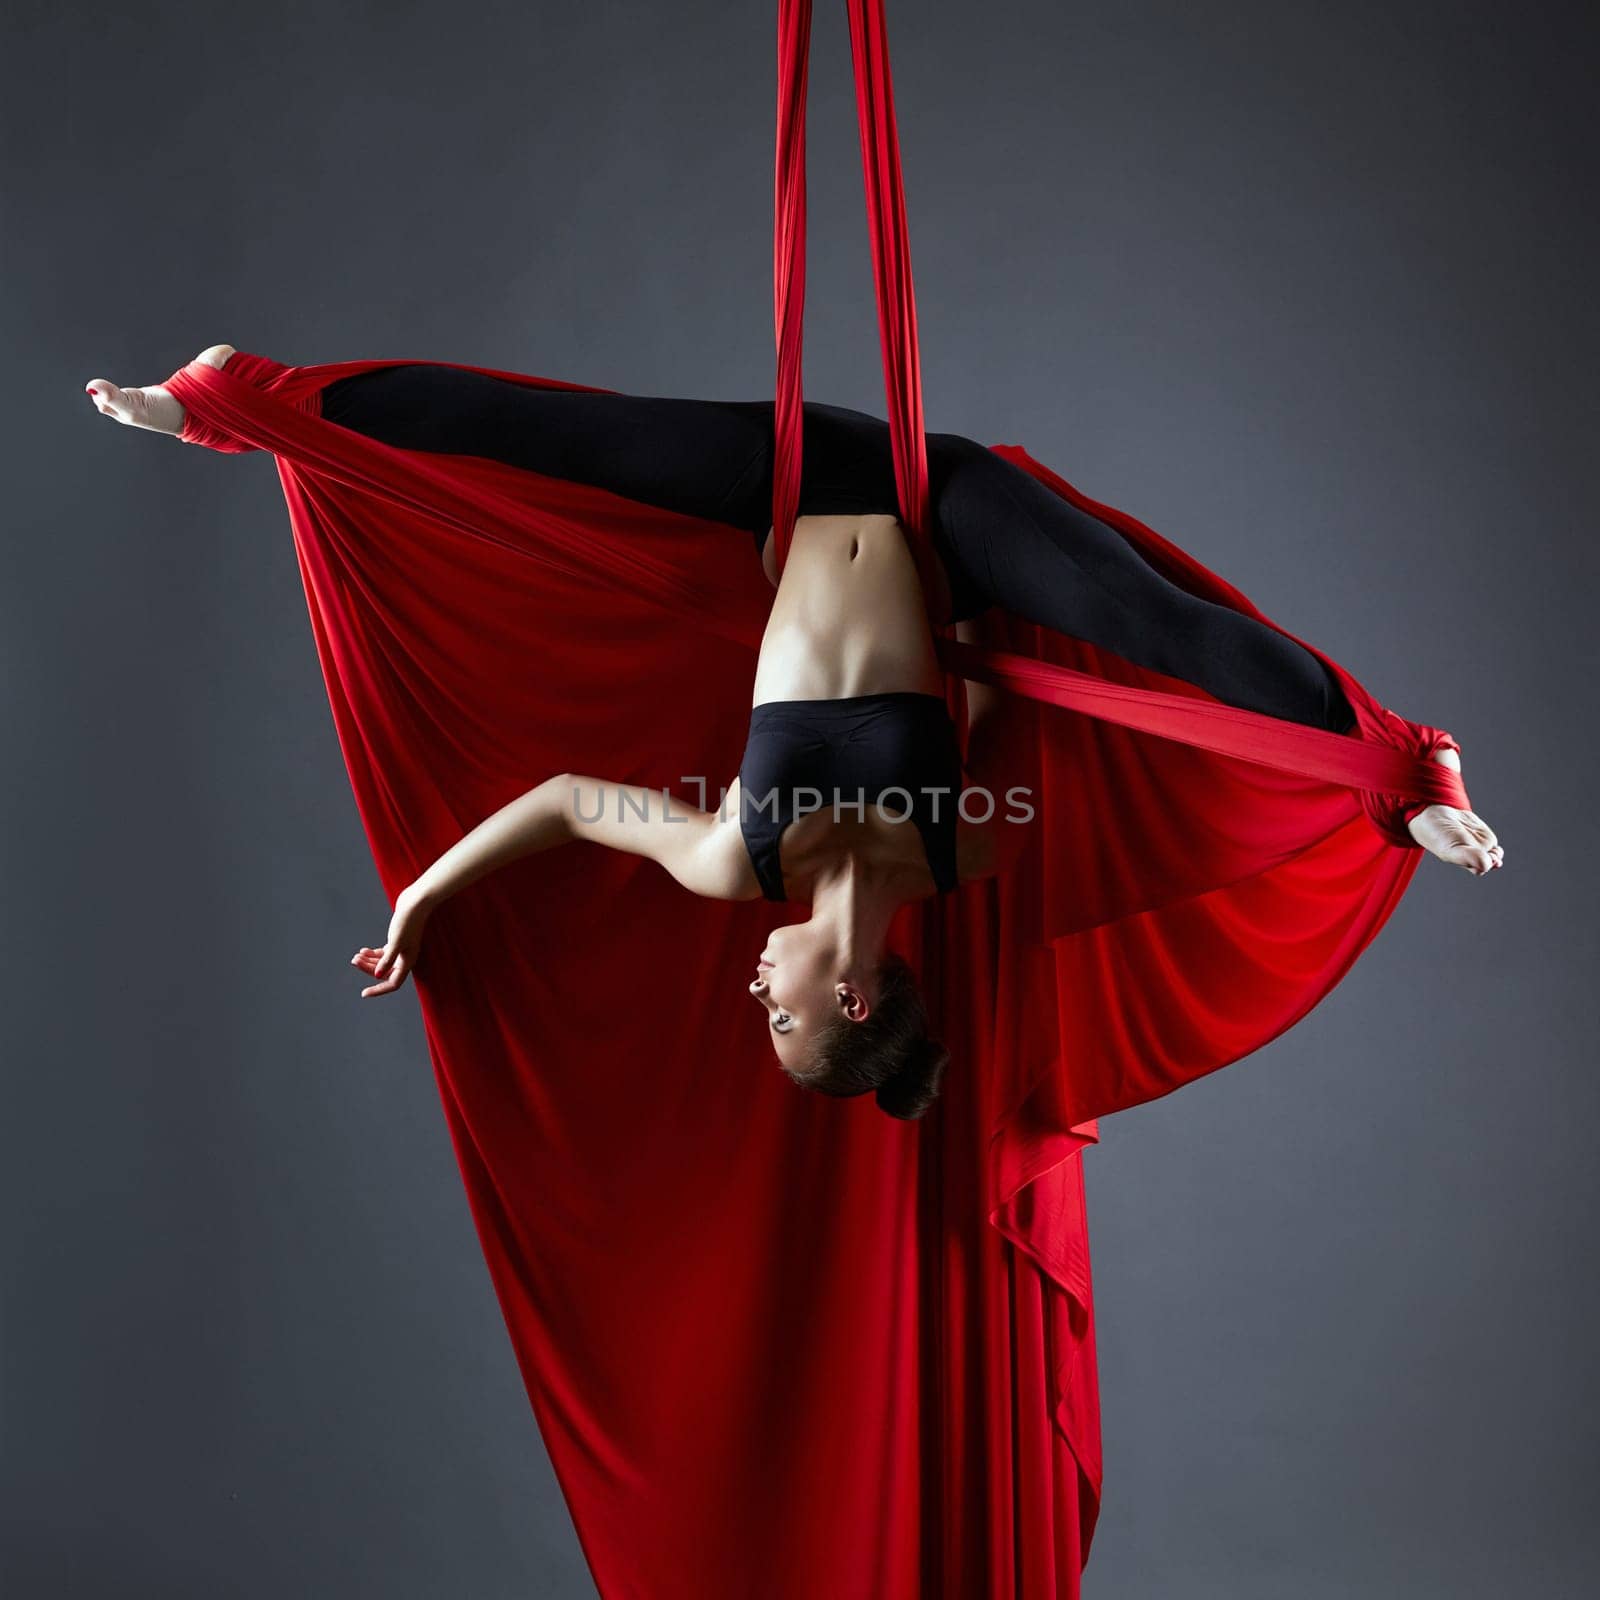 Graceful dancer on aerial silks posing upside down by rivertime